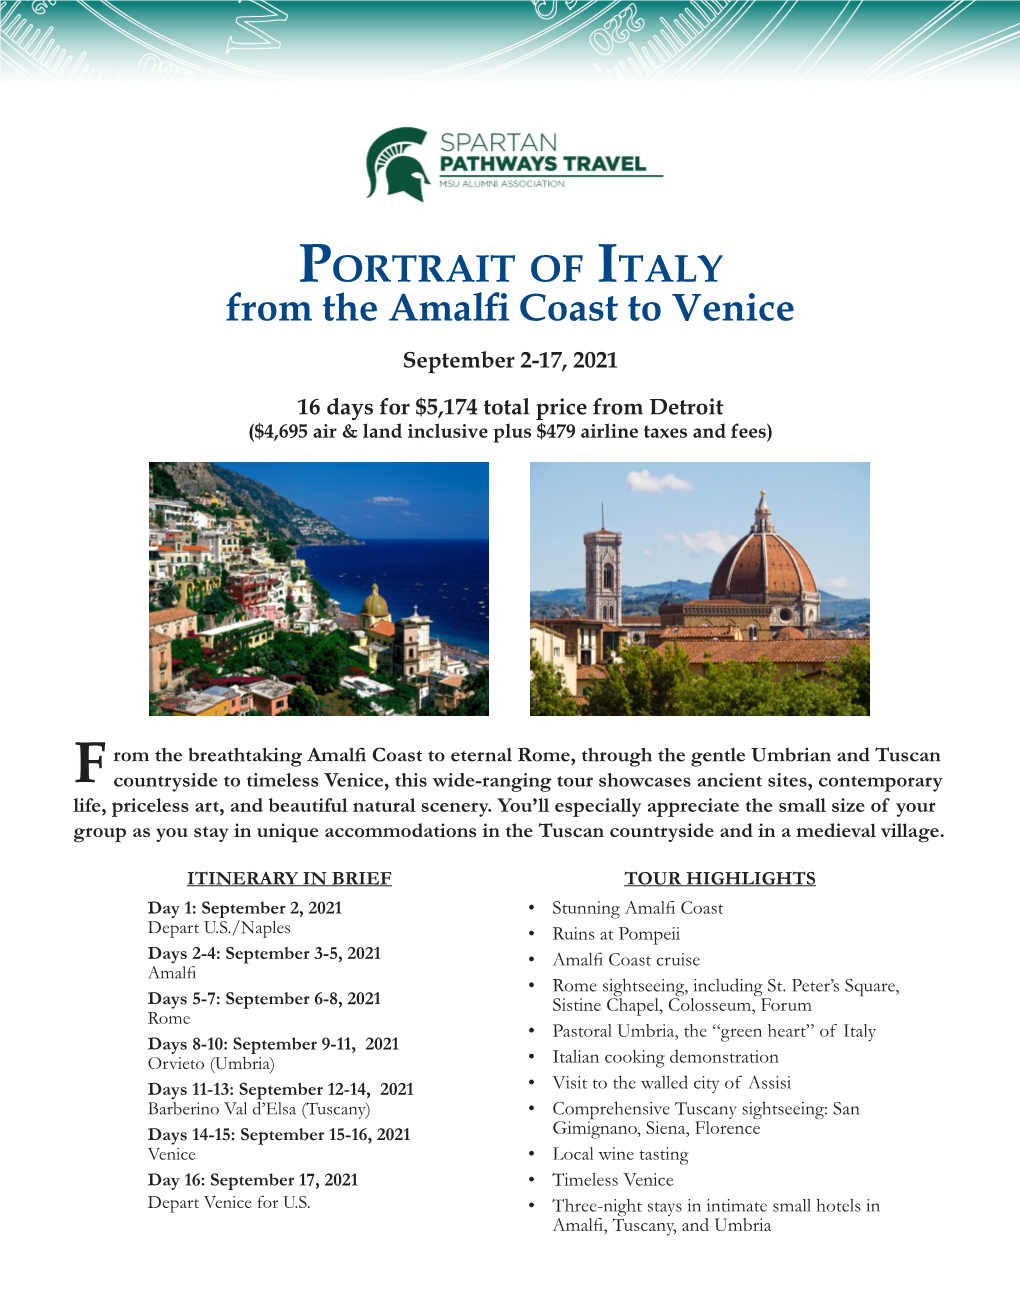 From the Amalfi Coast to Venice September 2-17, 2021